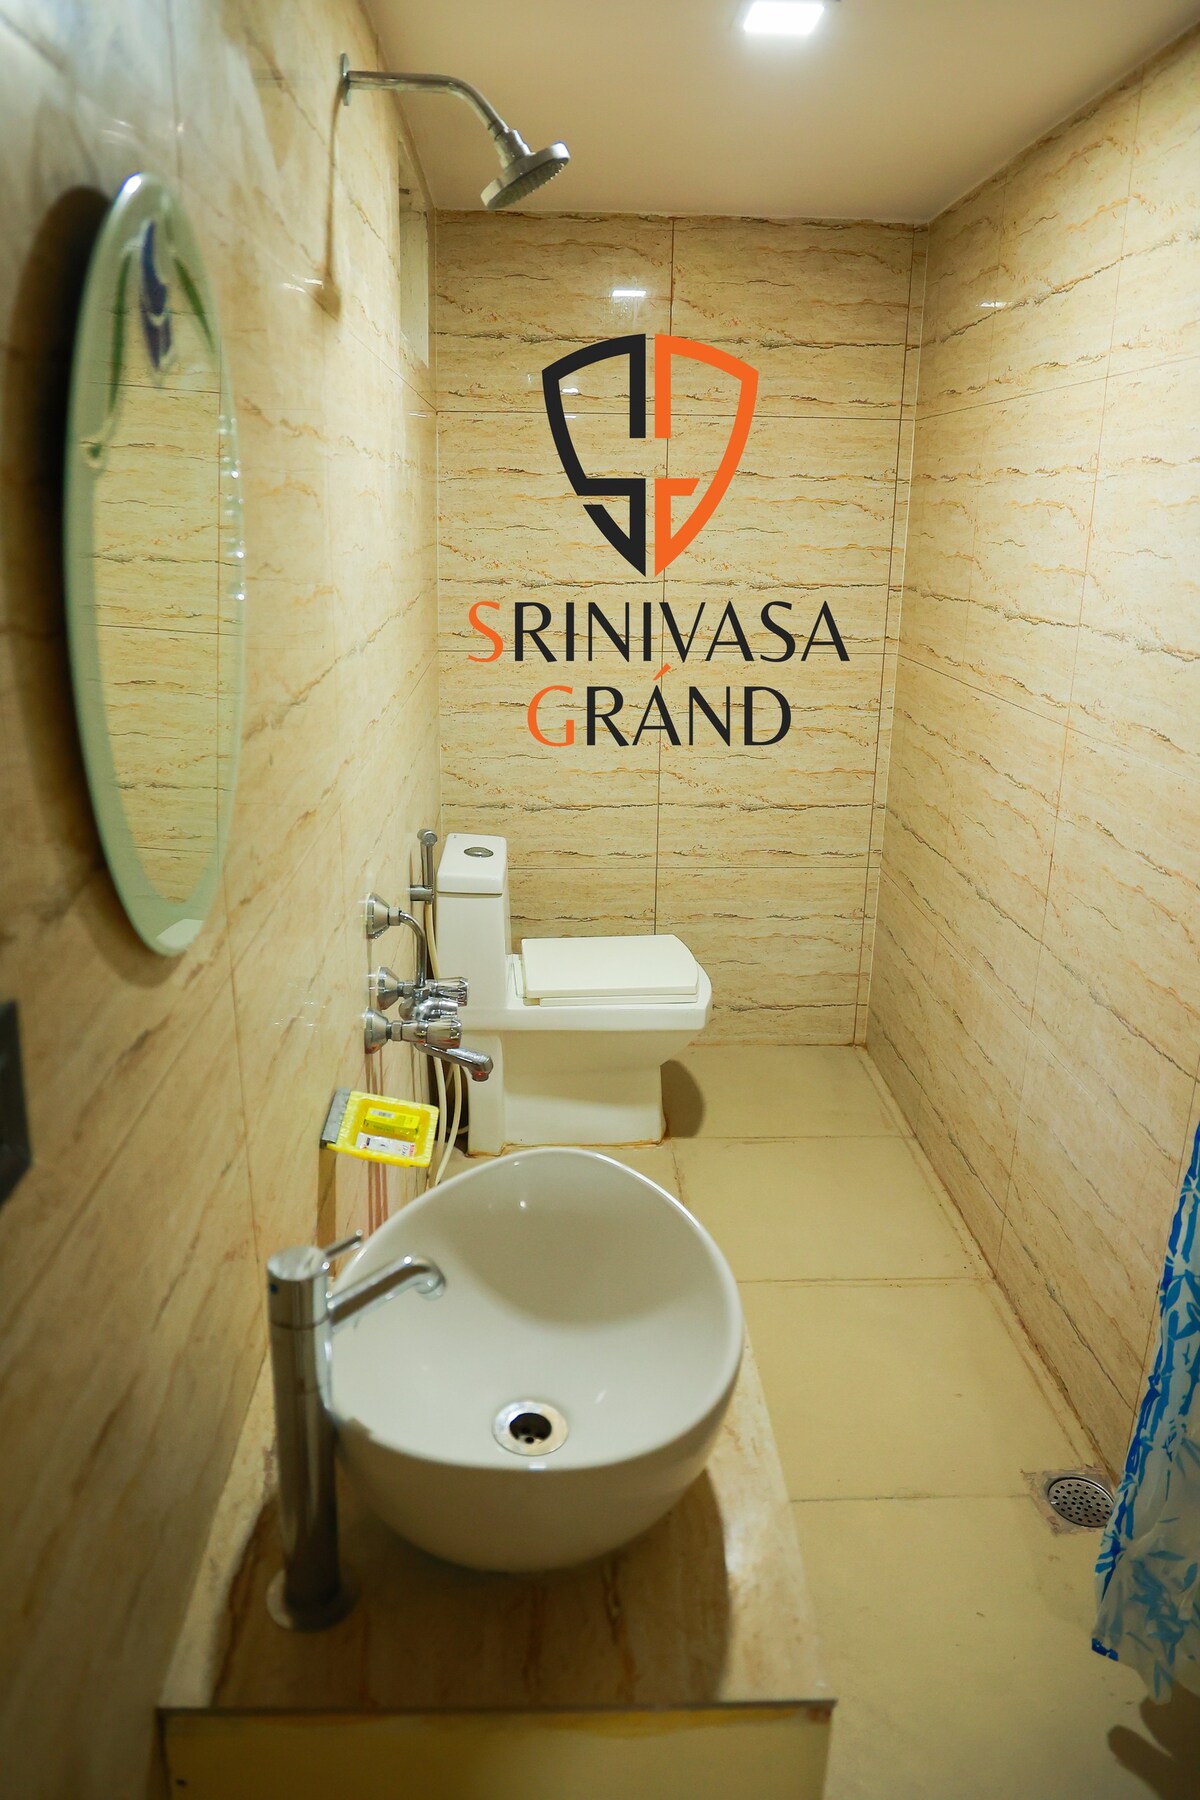 Standard at Srinivasa Grand